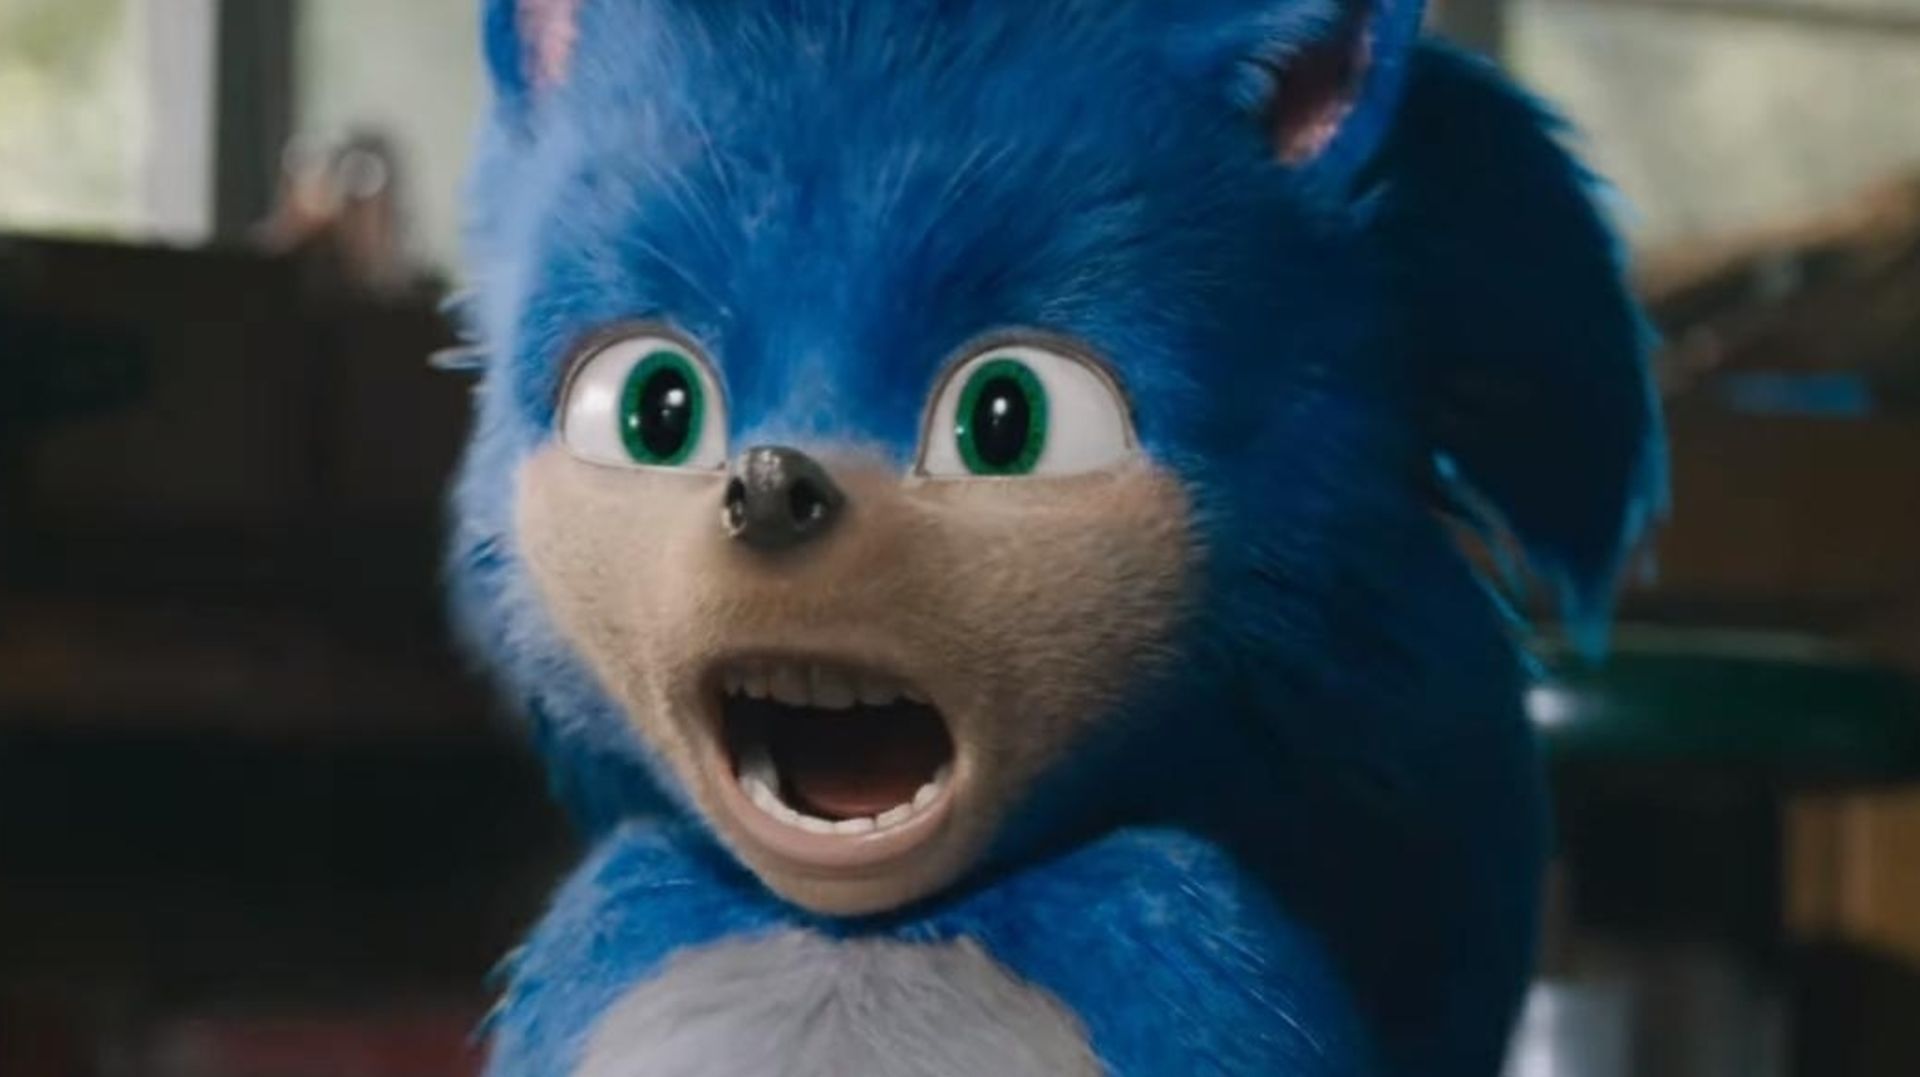 Sonic the Hedgehog's movie appearance will change following fan backlash